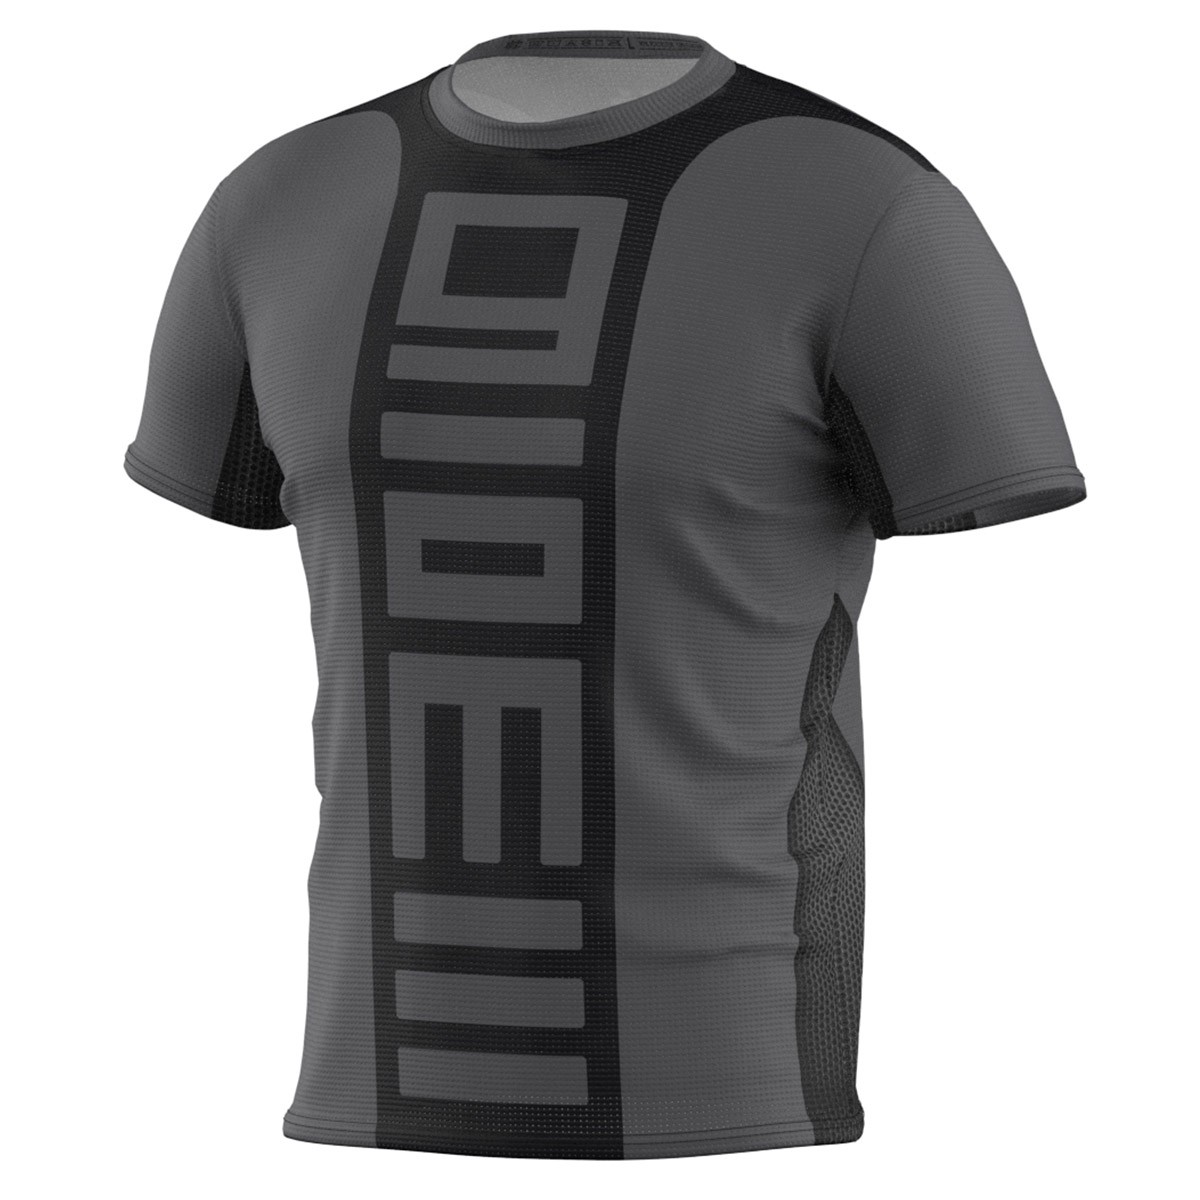 MC Armor Cool T-Shirt Thermoregulating Activewear